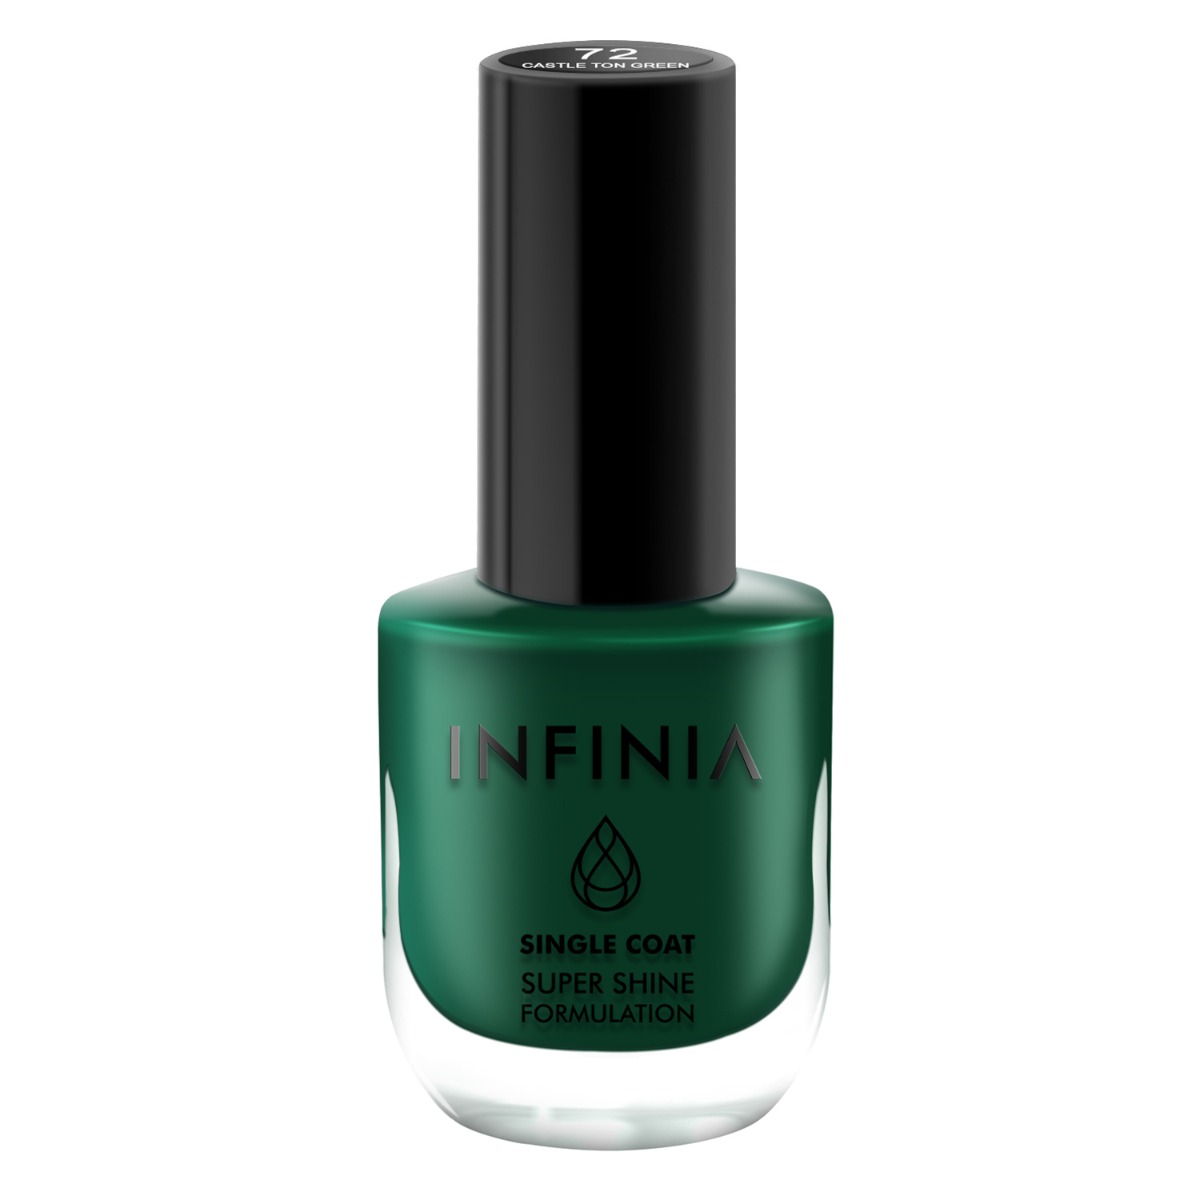 INFINIA Single Coat Super Shine Nail Polish With Ultra High Gloss, 12ml-072 Castle Ton Green